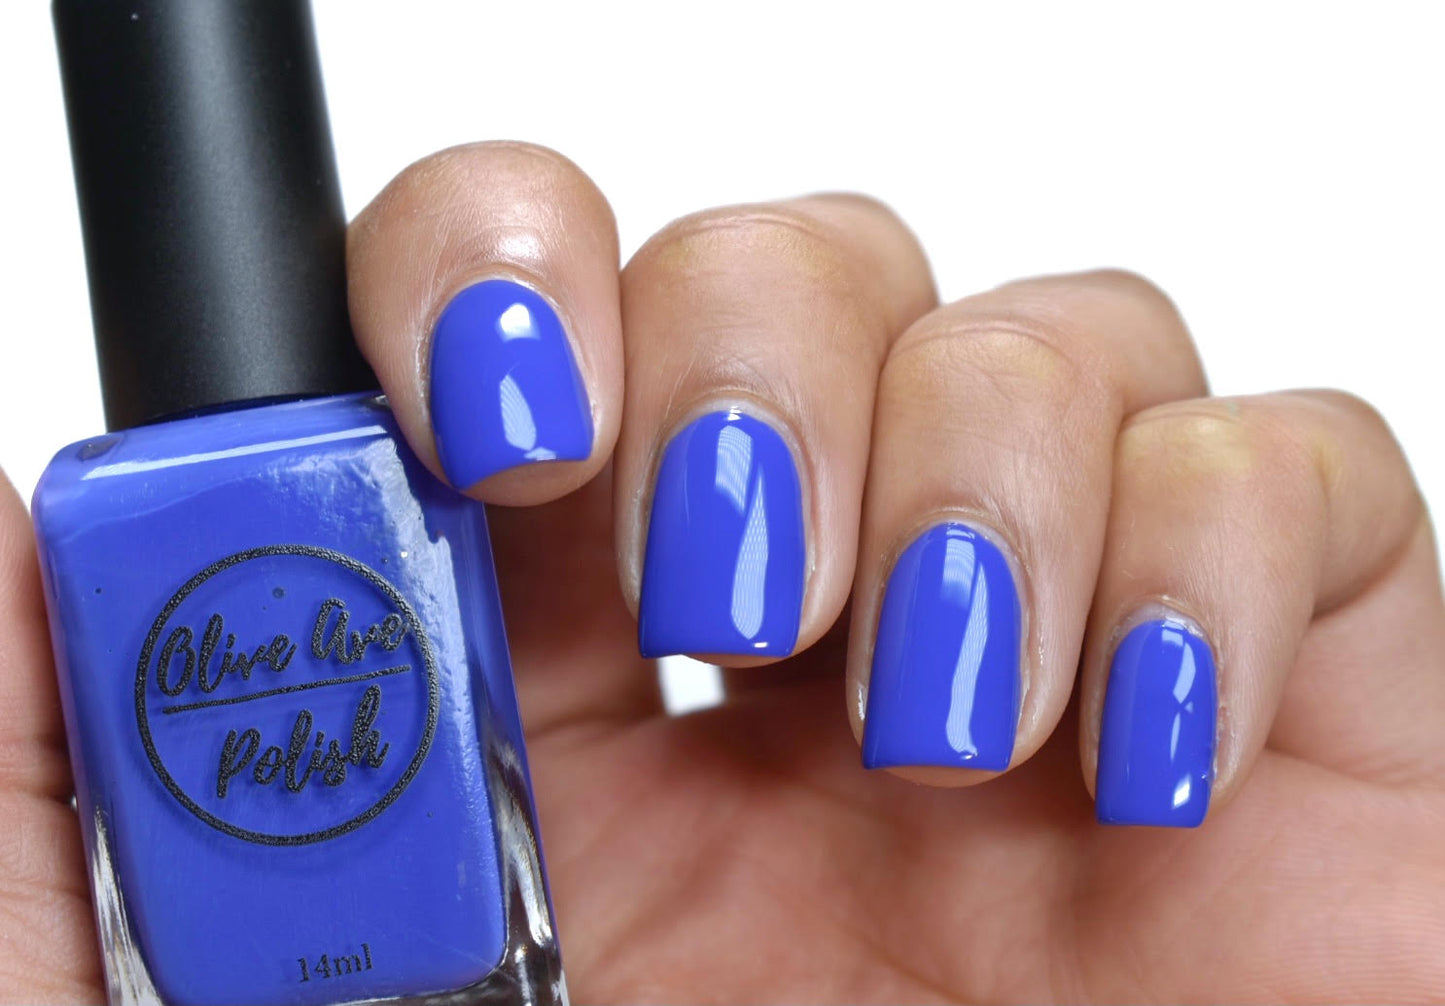 blue purple nail polish swatch on pale skin tone